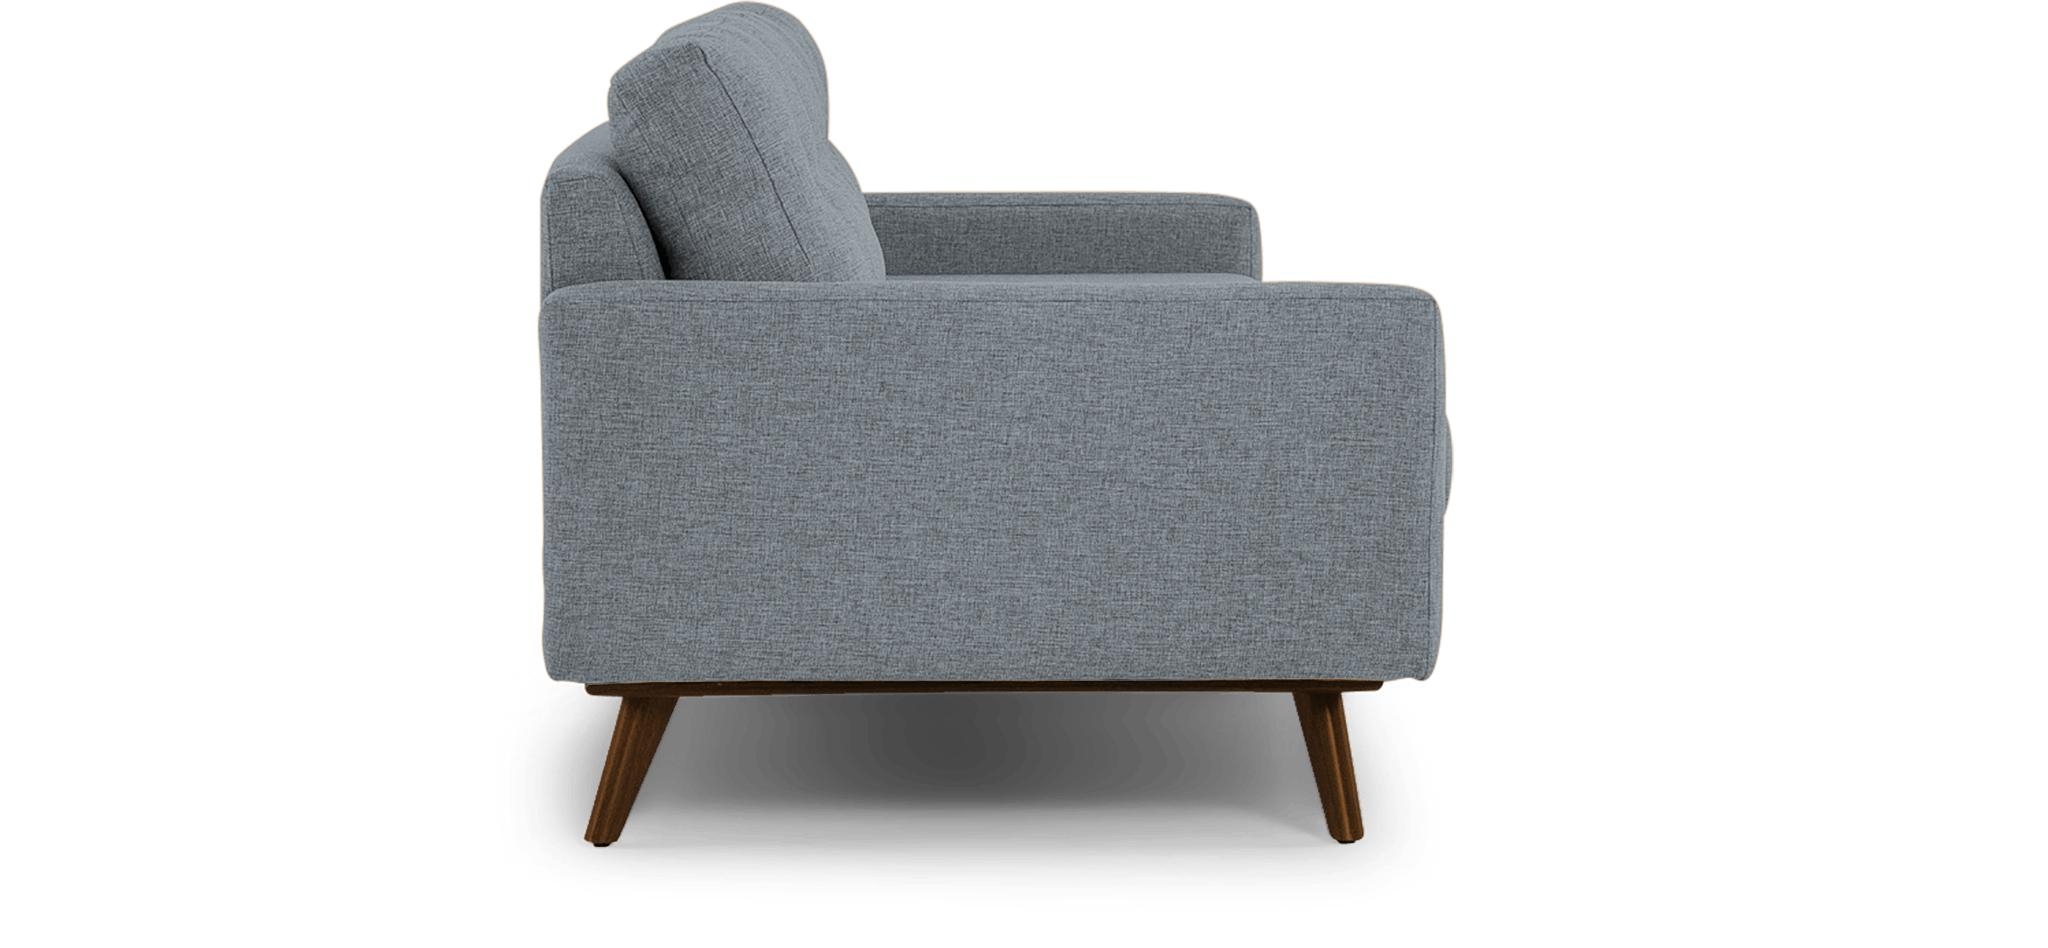 Gray Hopson Mid Century Modern Grand Sofa - Synergy Pewter - Mocha - Image 2